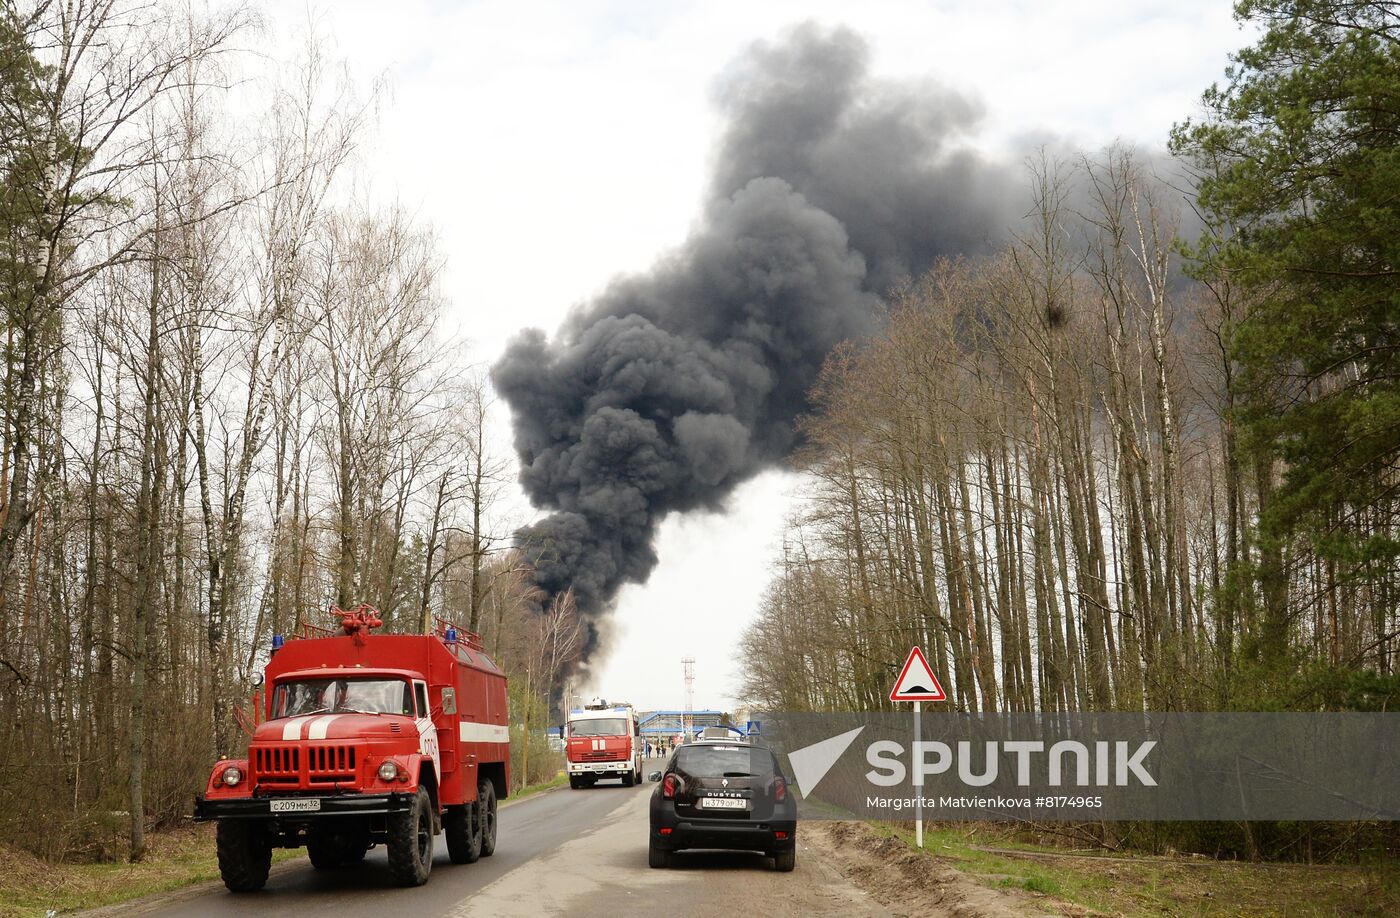 Russia Fuel Depot Fire